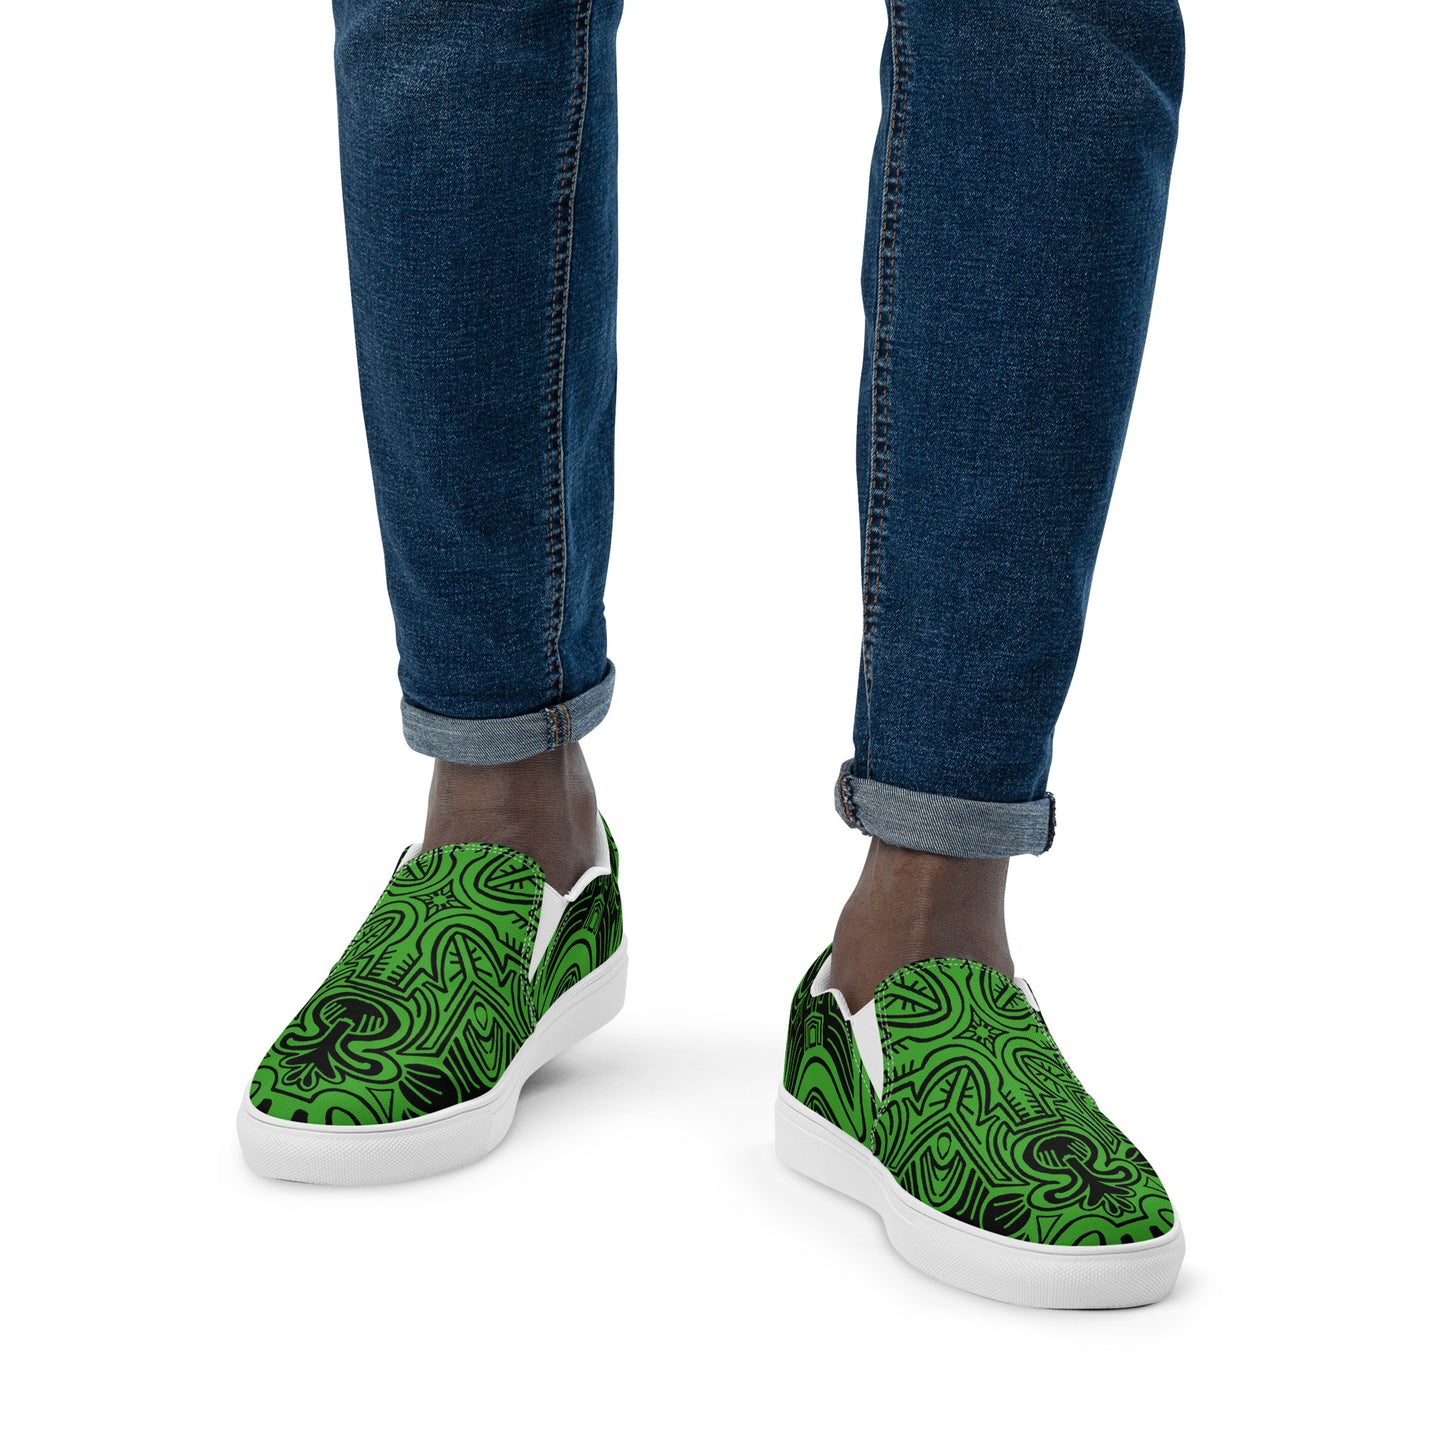 Jombi Green Men’s Slip-on Canvas Shoes